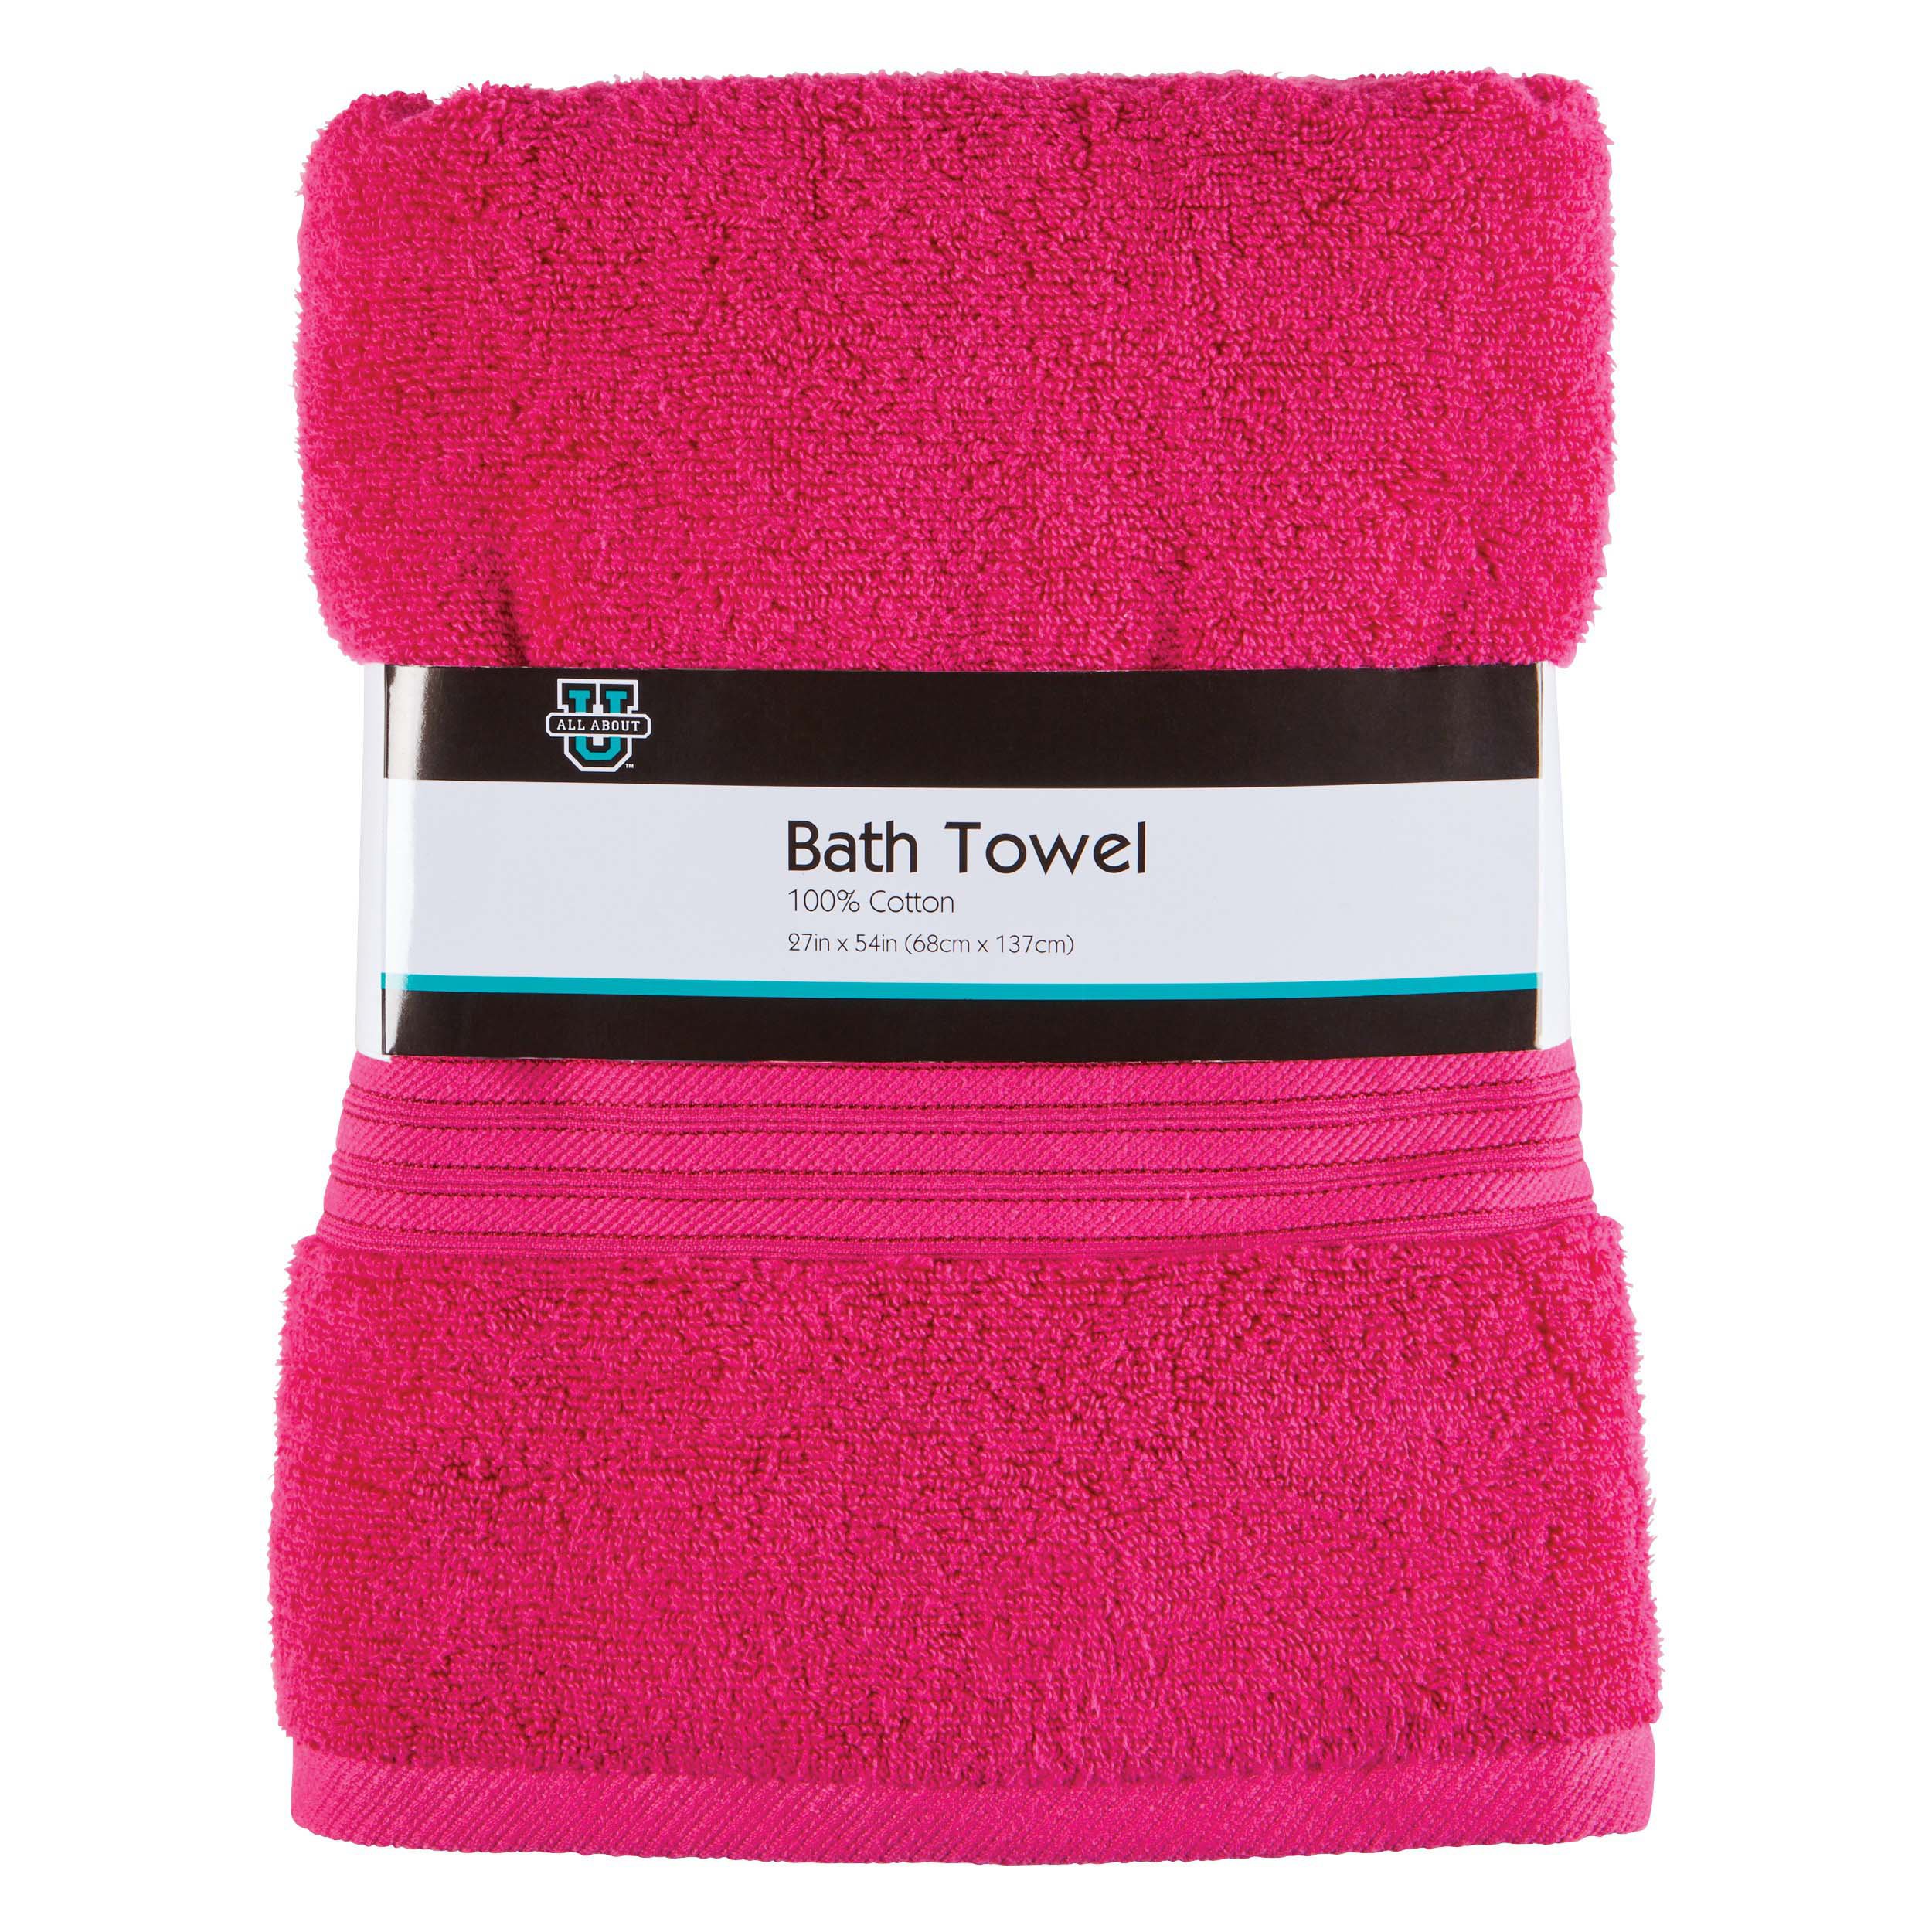 All About U Bath Towel Magenta - Shop Towels & Washcloths at H-E-B